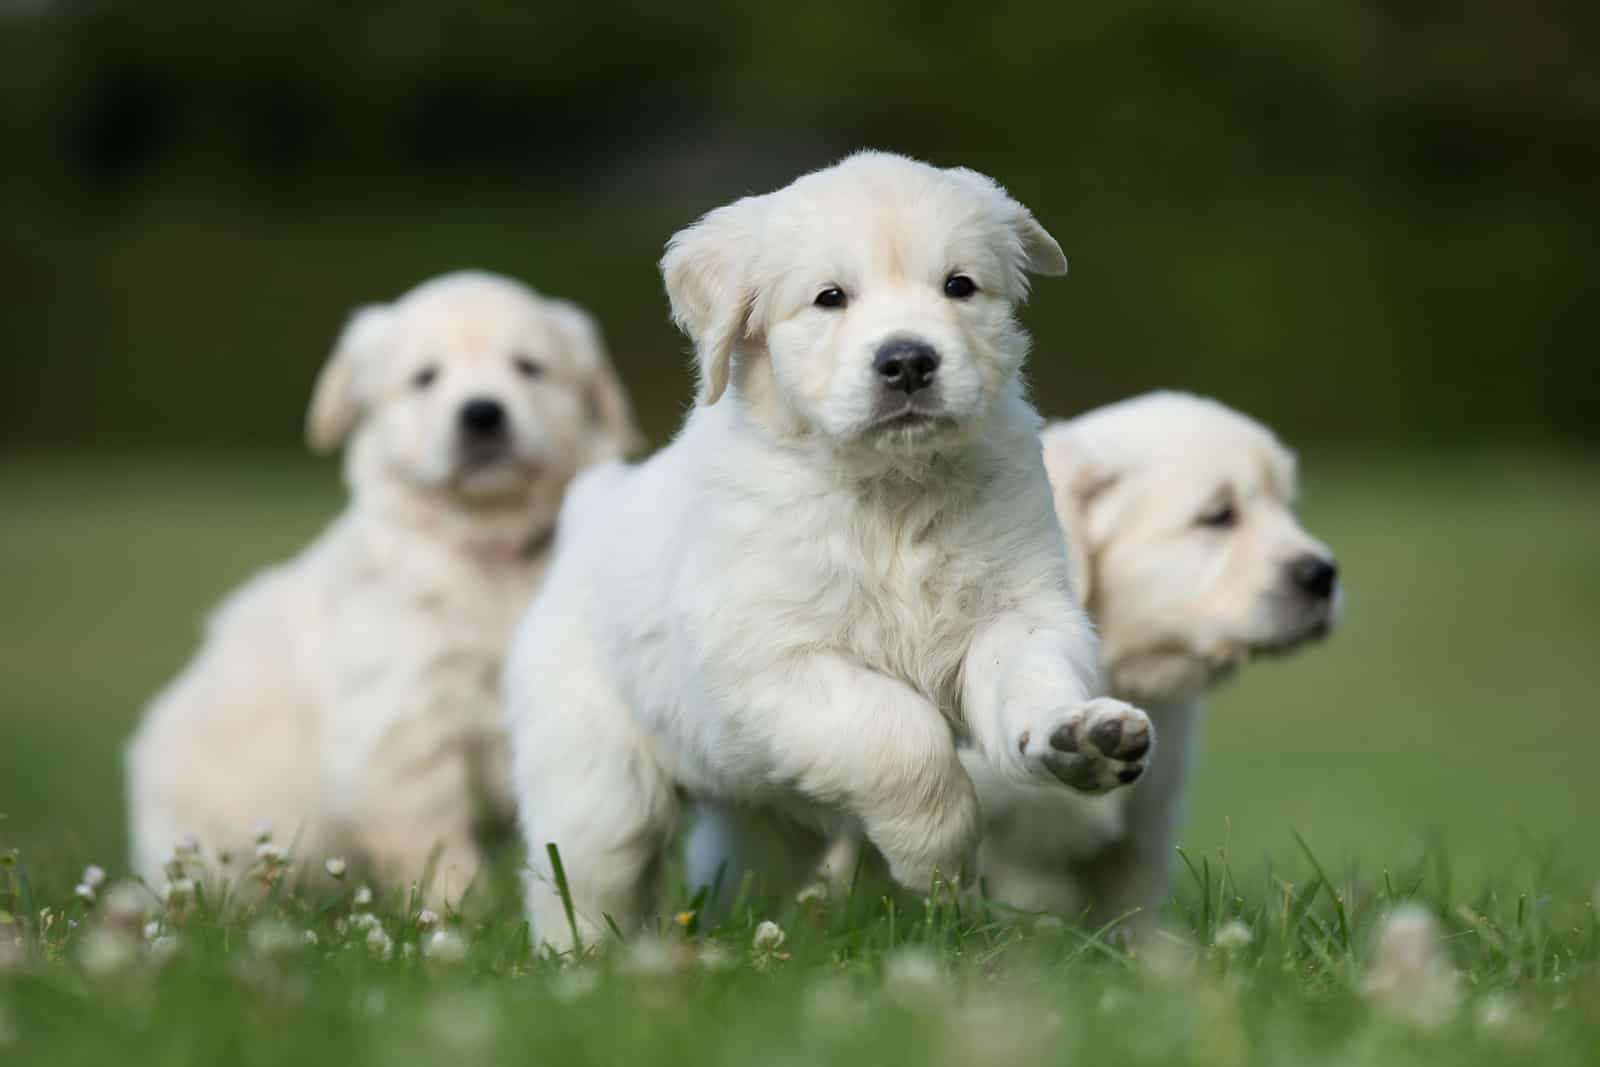  golden retriever puppies outdoors running in the field